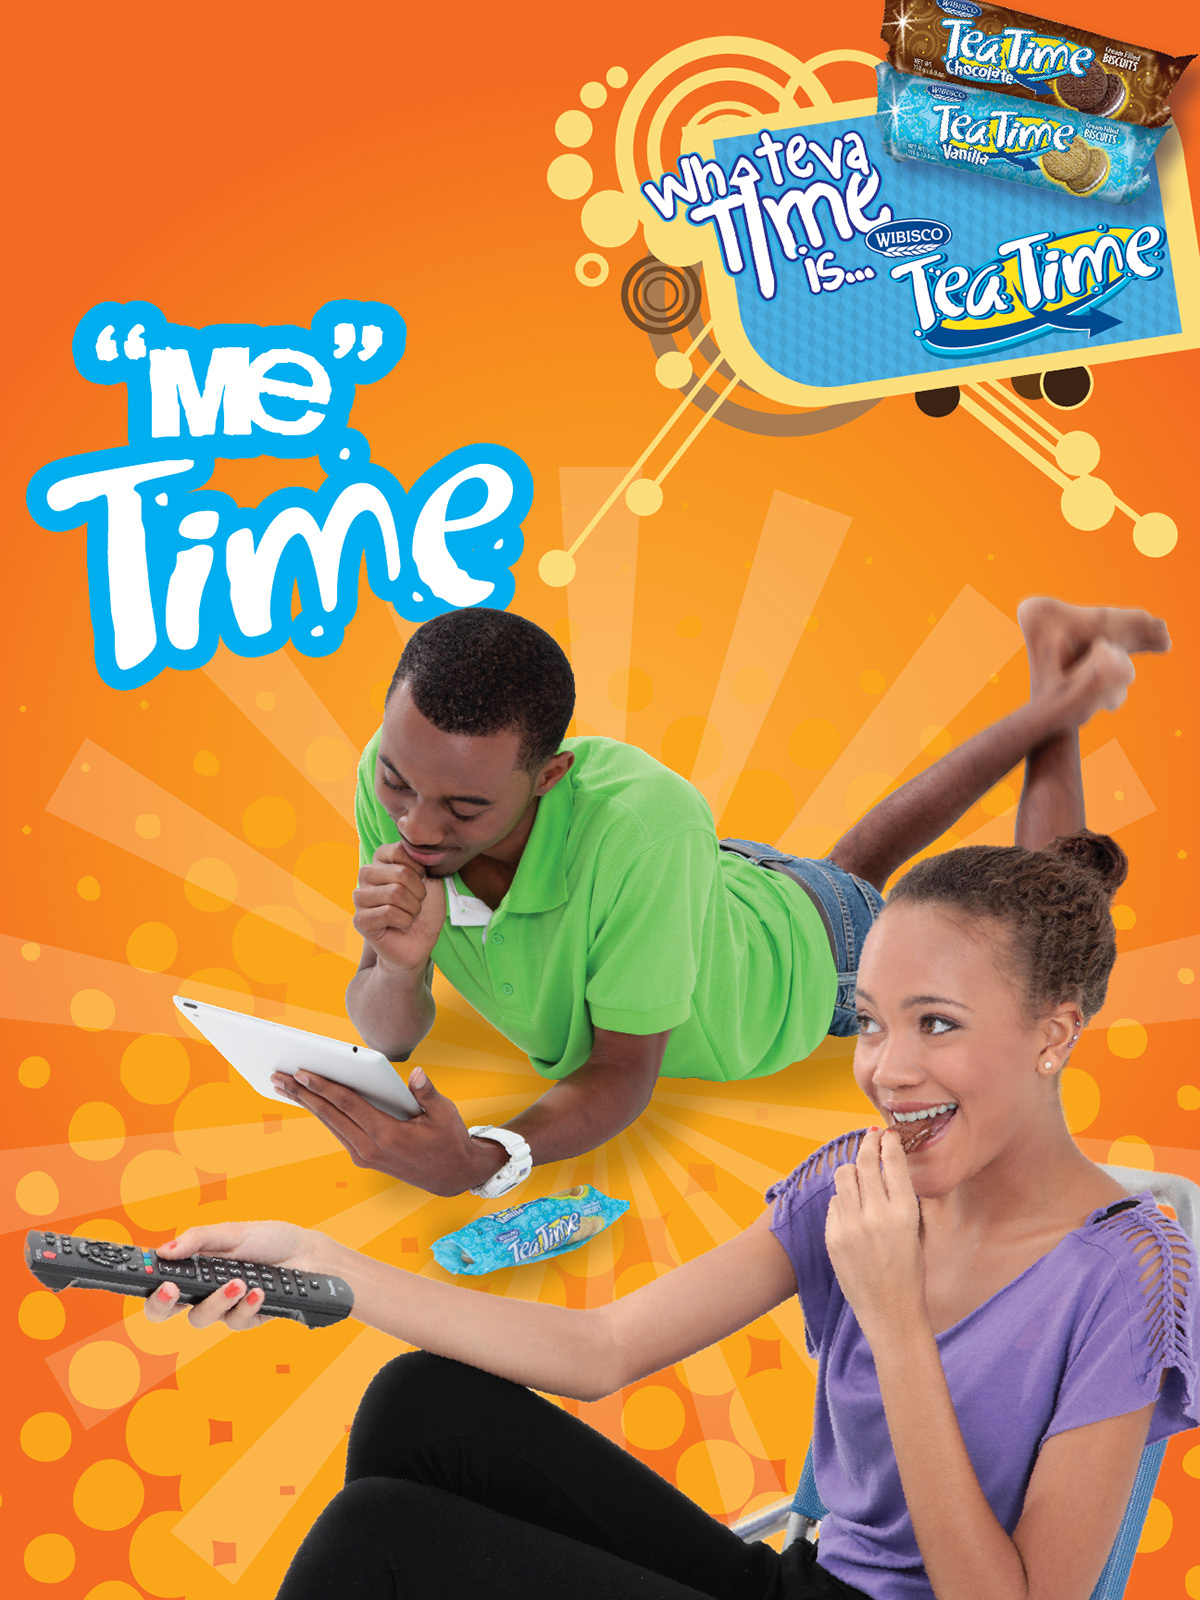 Tea Time biscuits Barbados Wibisco RED advertising Ballista! Poster Design Caribbean Tea Time